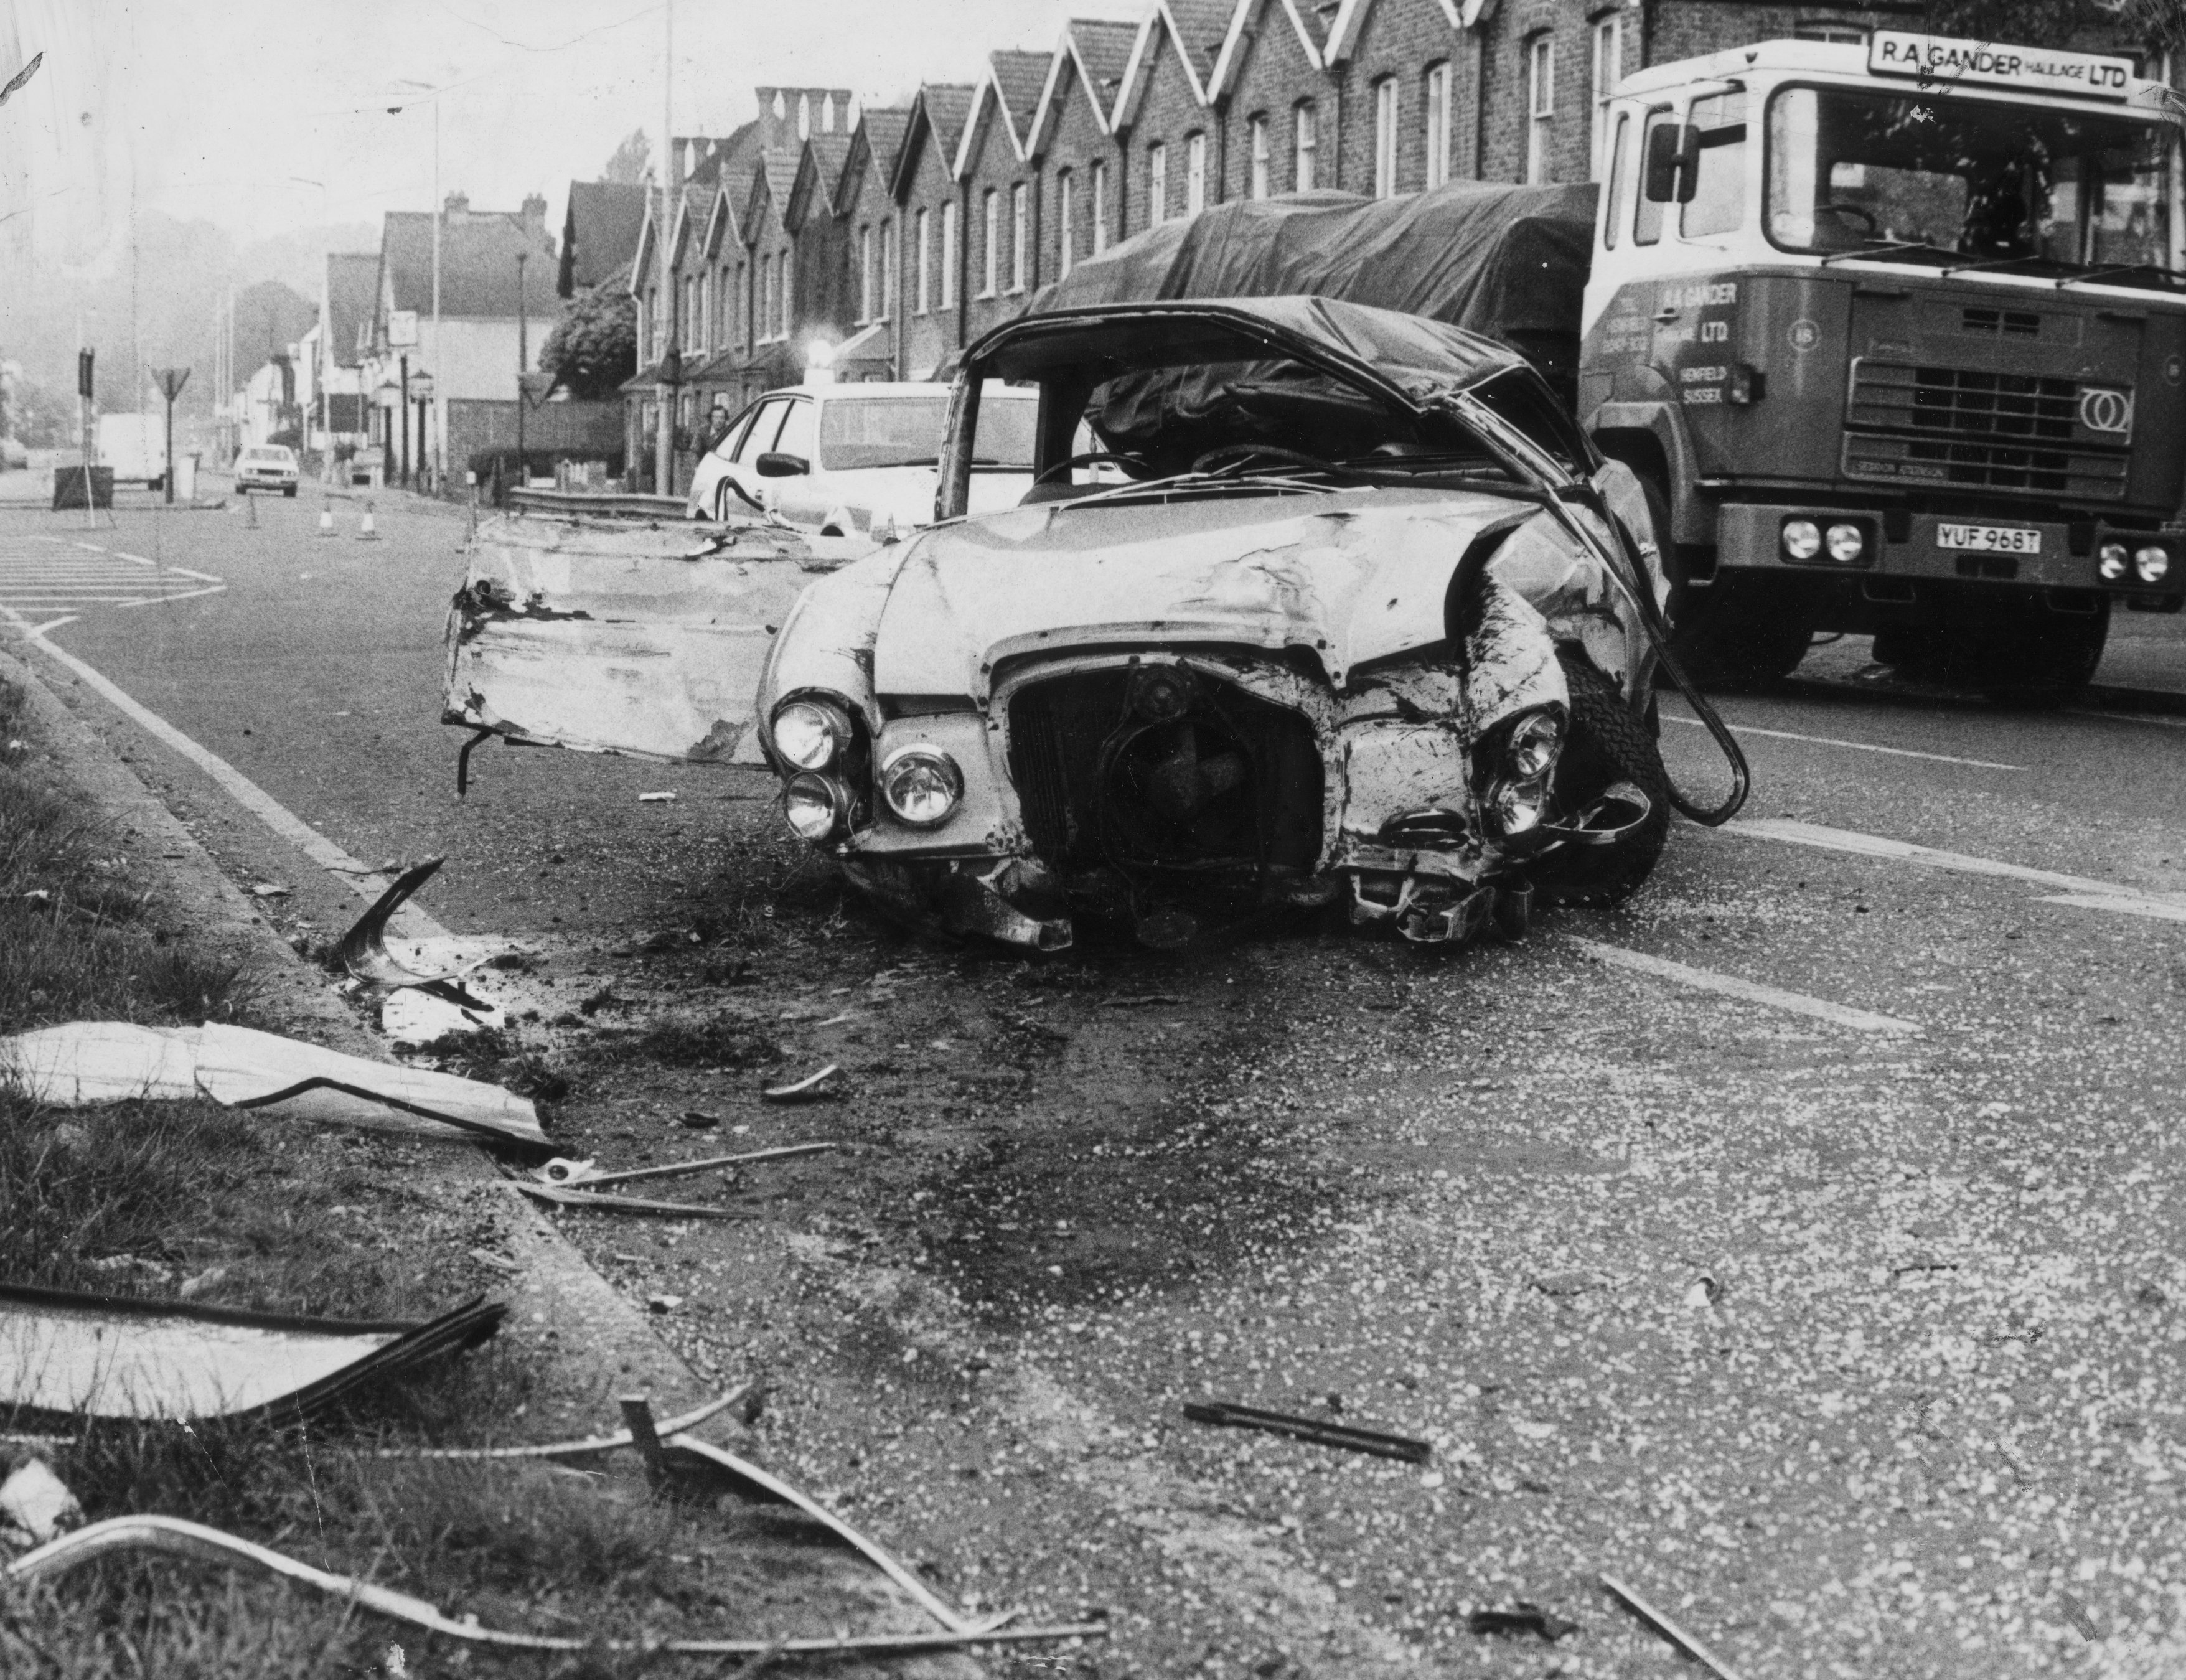 Ringo wrecked his Mercedes 280E in 1980